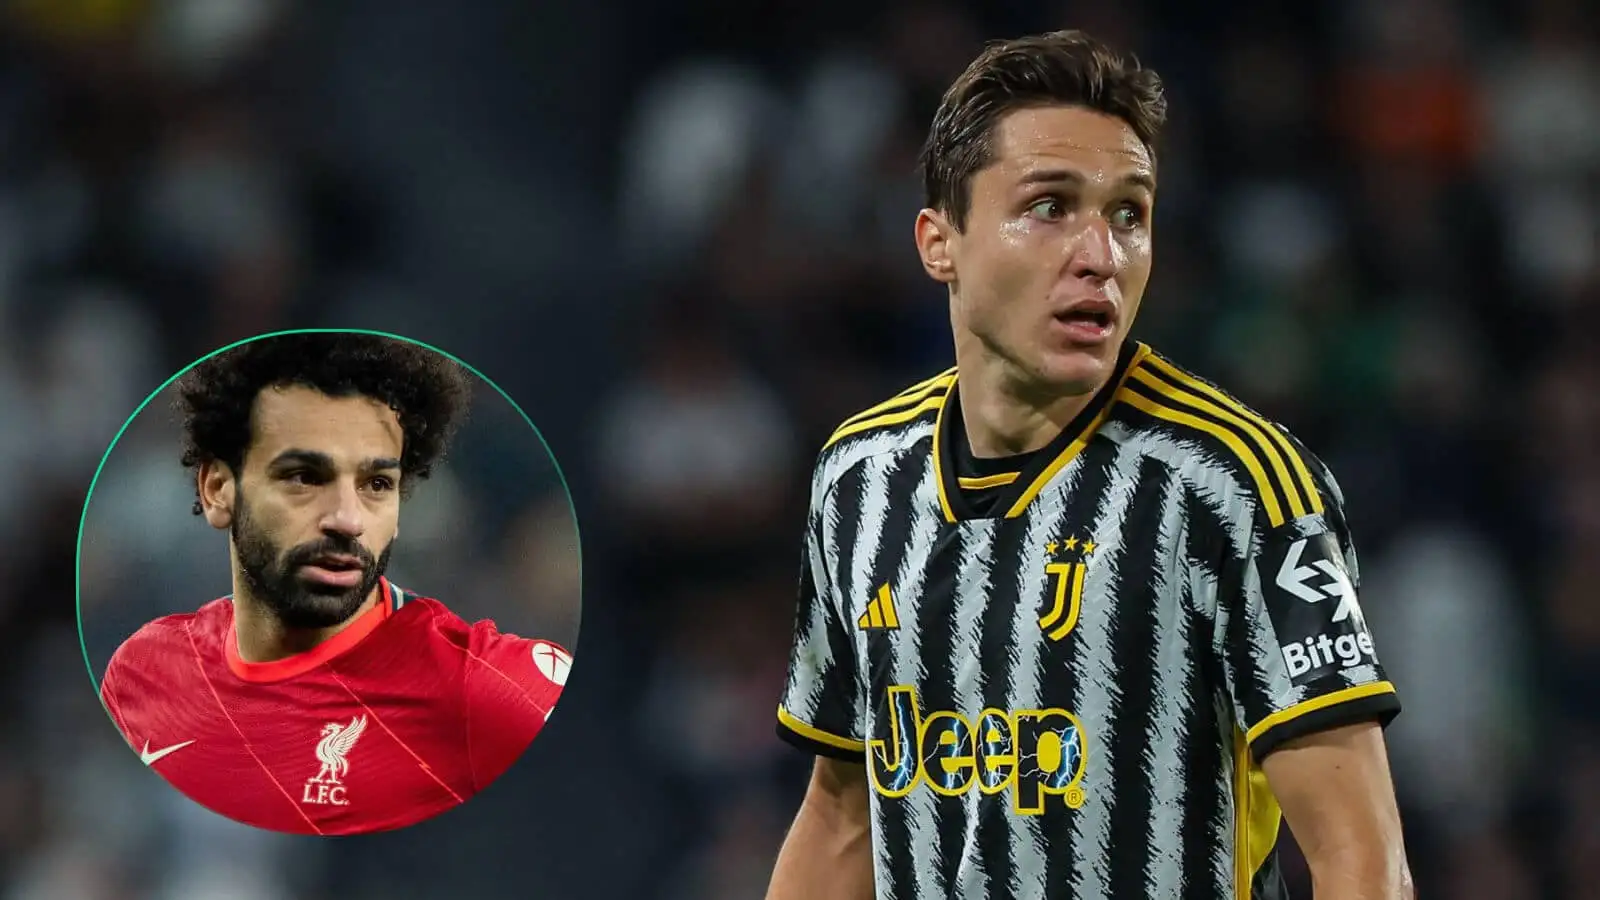 Juventus winger Federico Chiesa and Liverpool forward Mohamed Salah